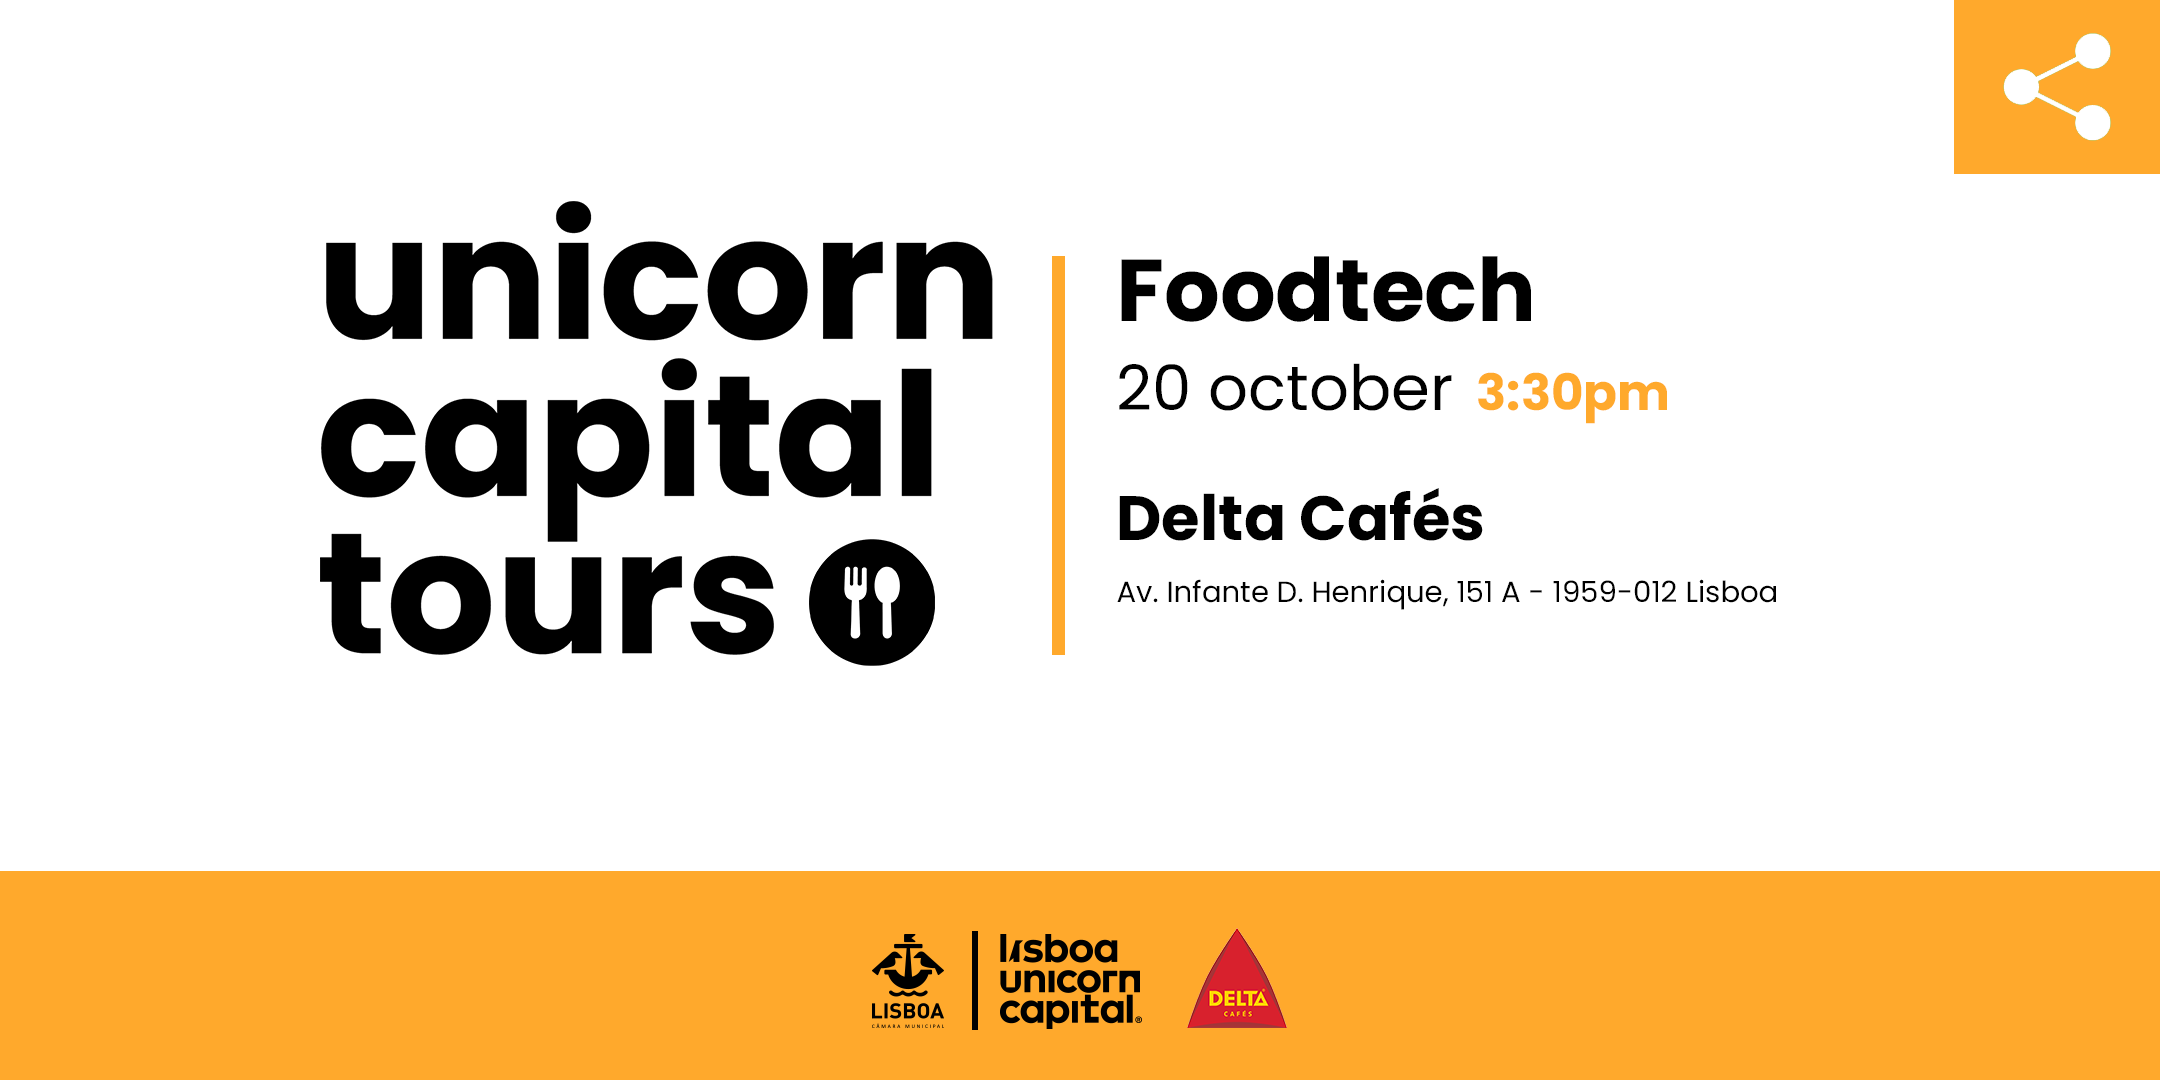 Lisboa Unicorn Capital organiza tour dedicada à foodtech em Lisboa